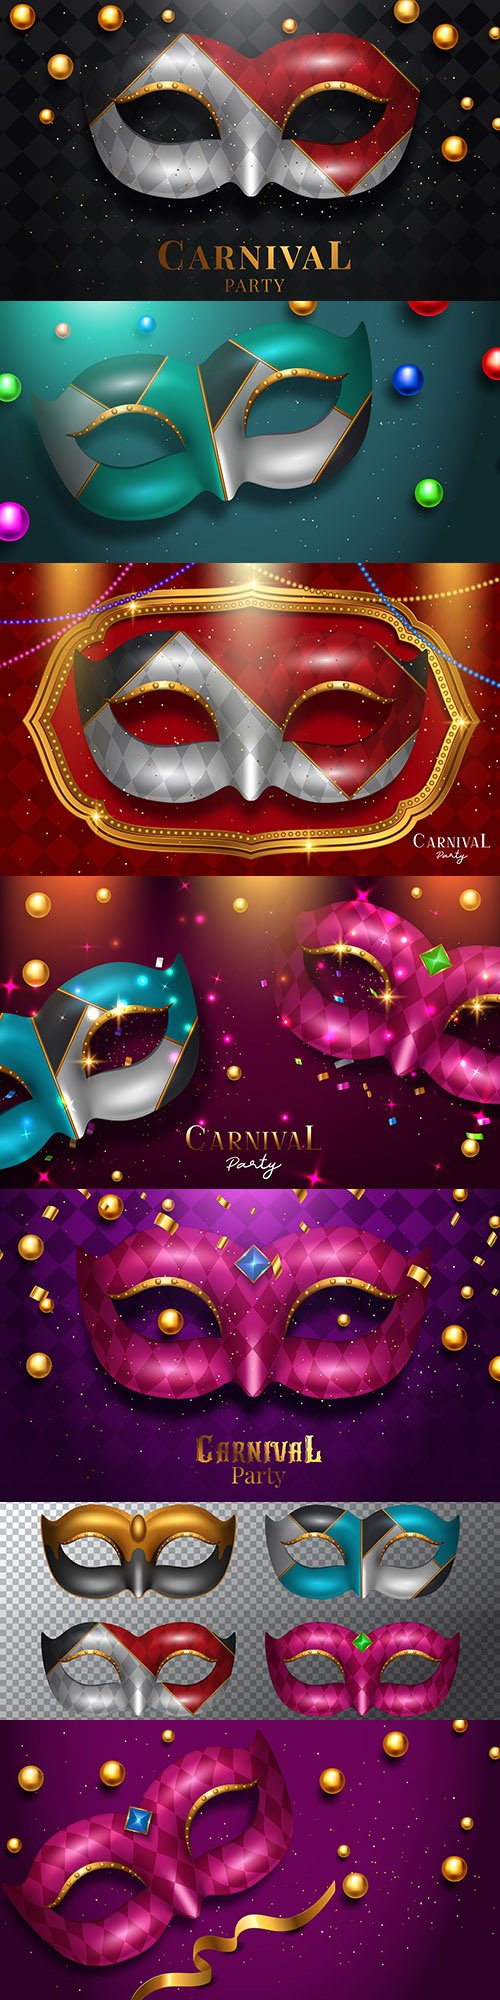 Mask Mardi gras design carnival party 3d illustrations